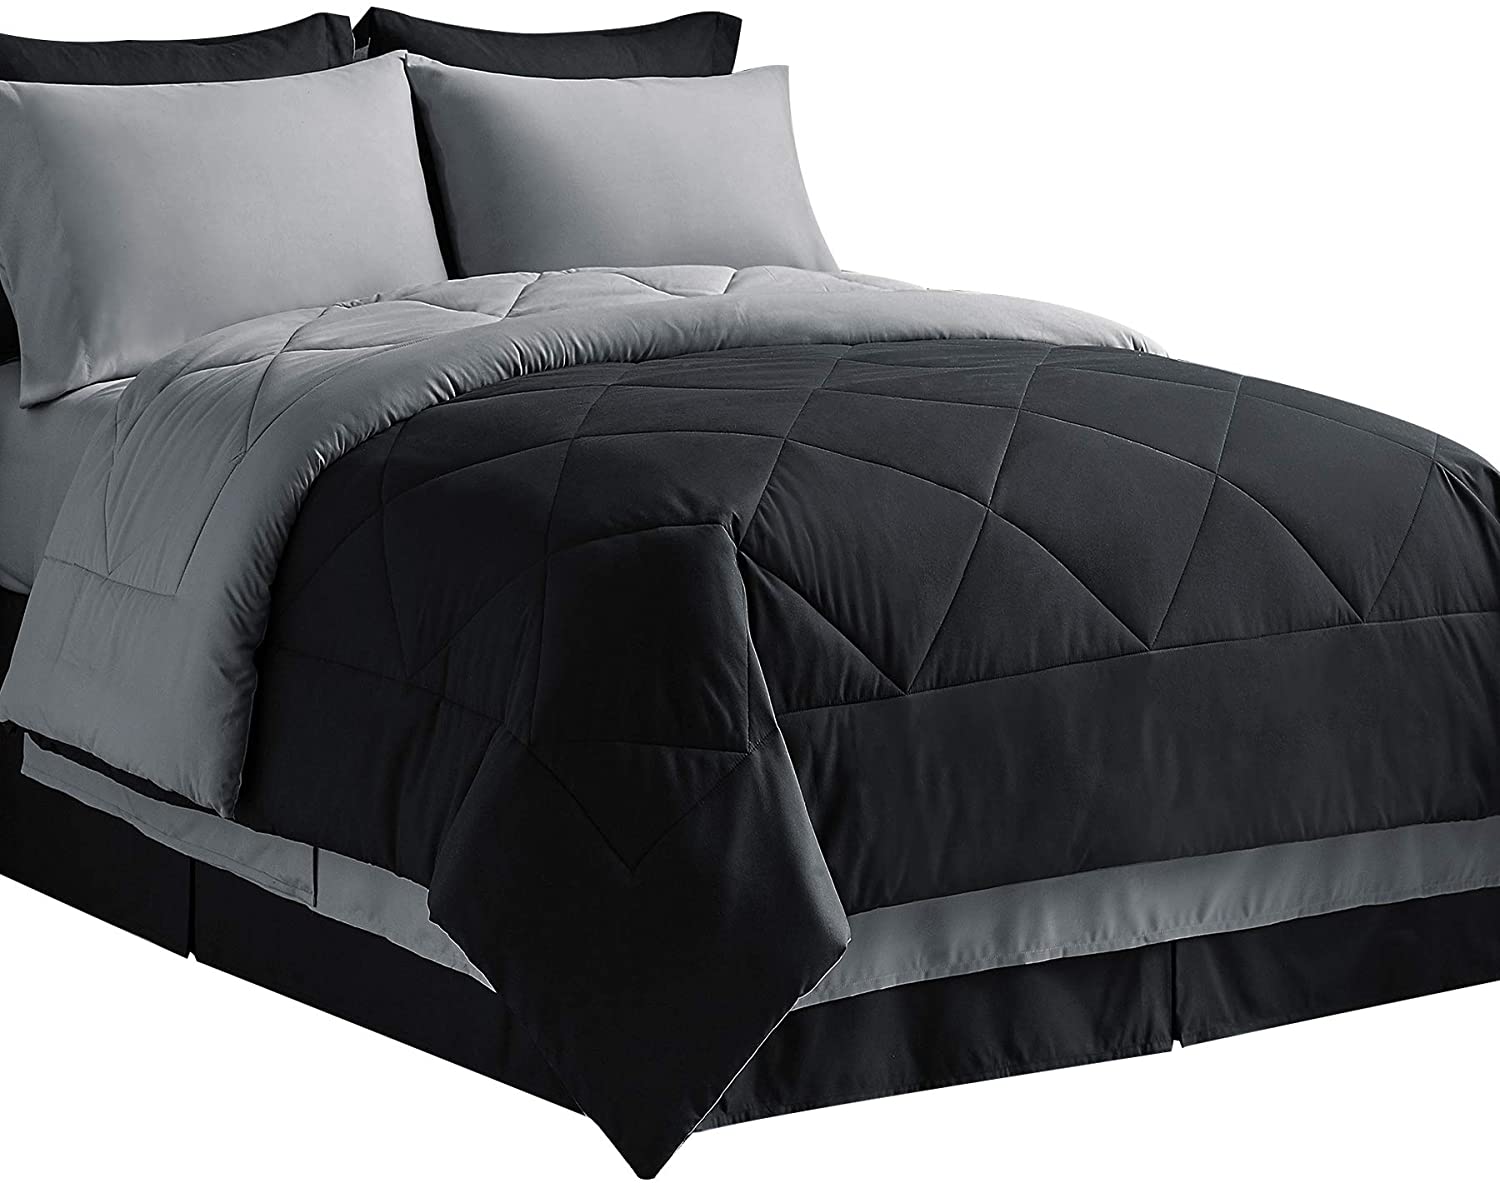 Bedsure Bed In A Bag Comforter Sets, Grey Twin Bed Comforter